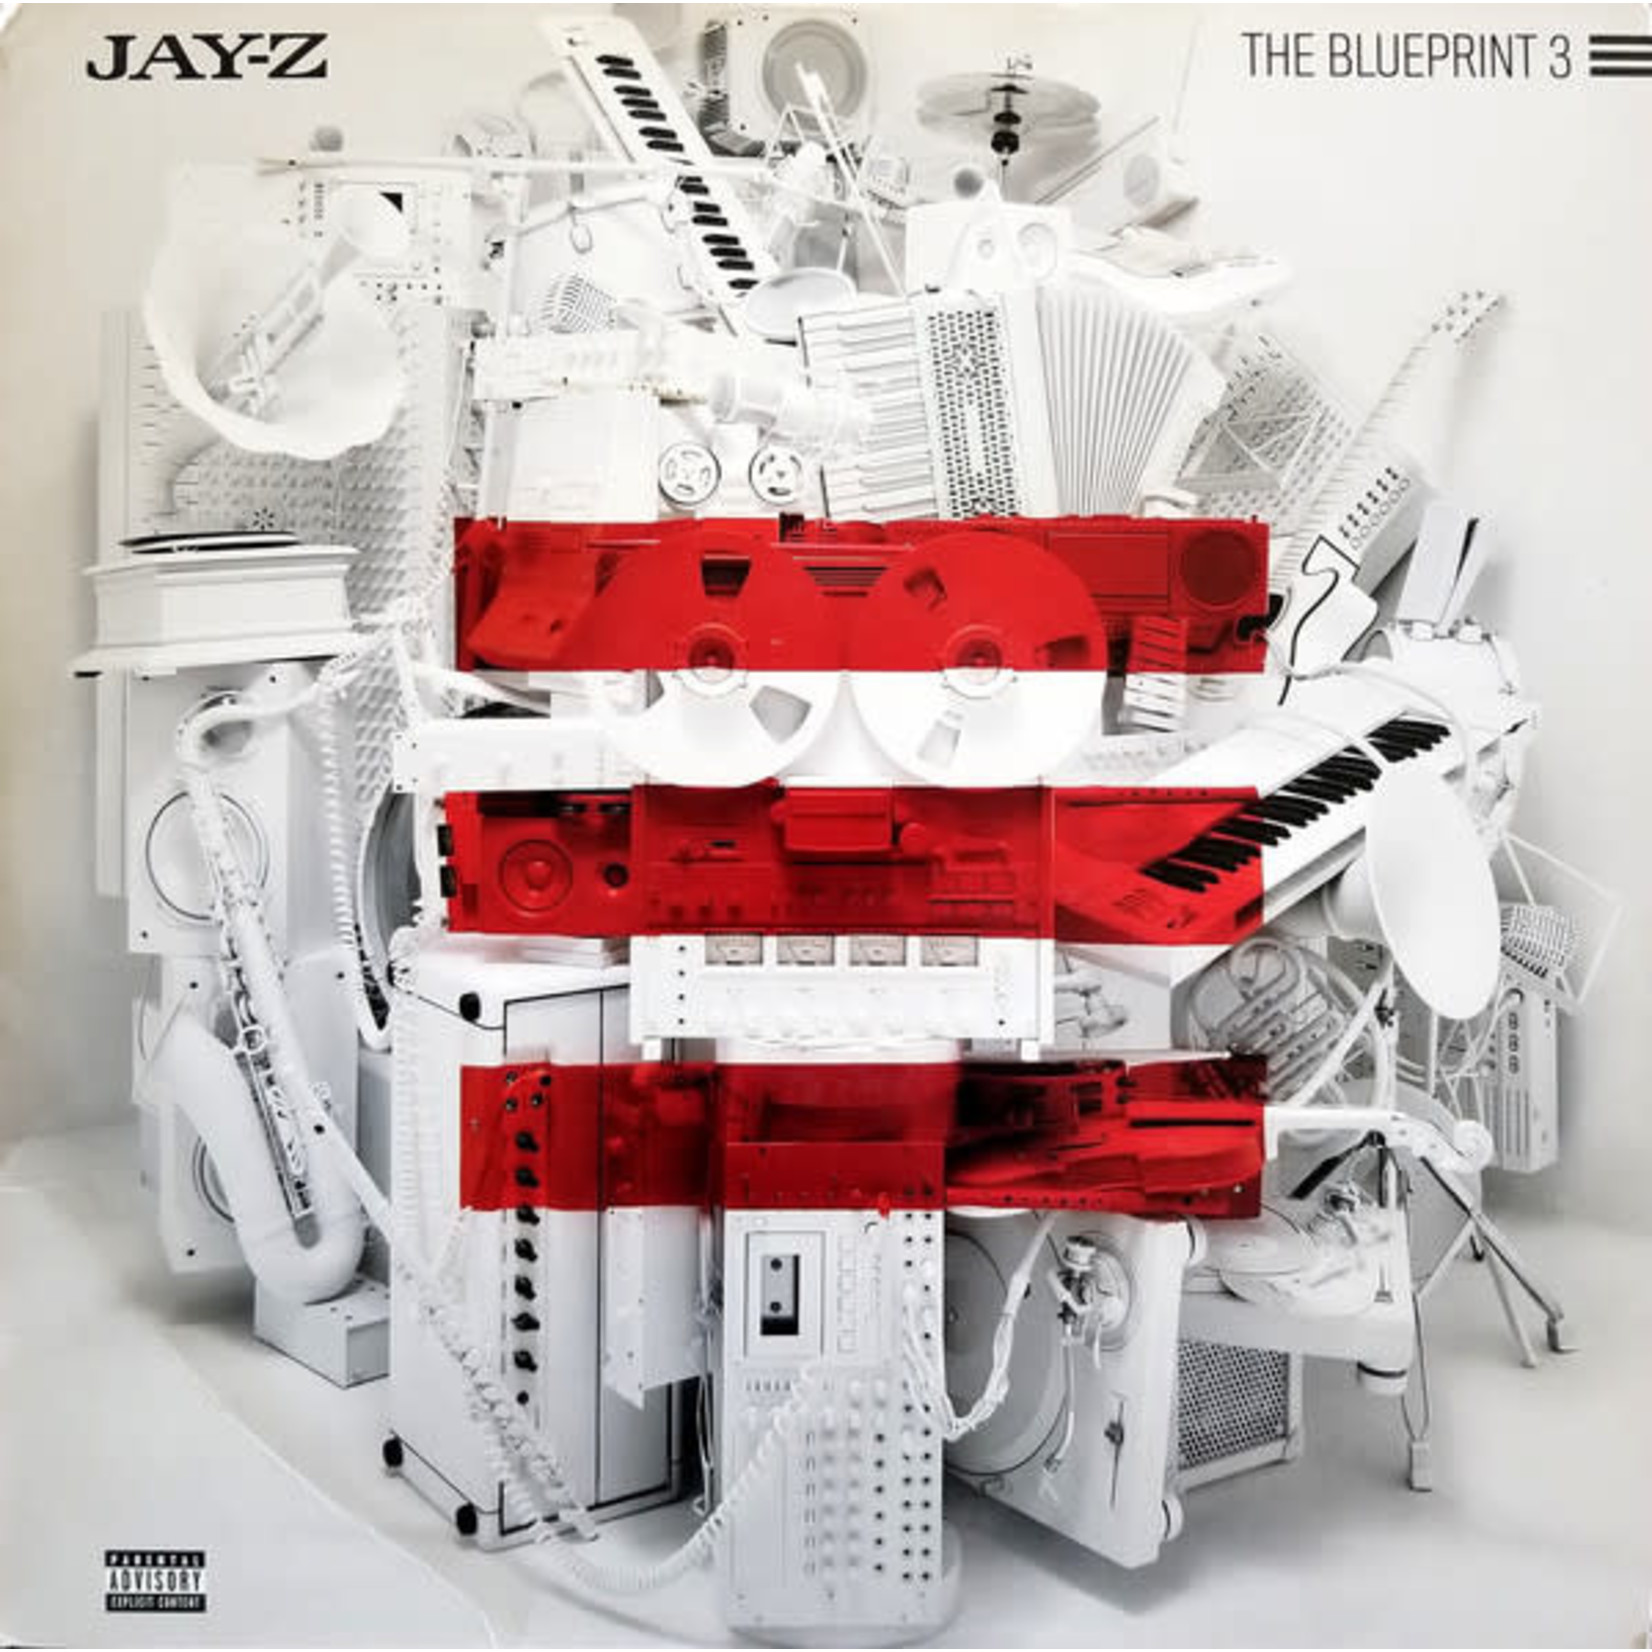 Jay Z Jay-Z - The Blueprint 3 (VG) N